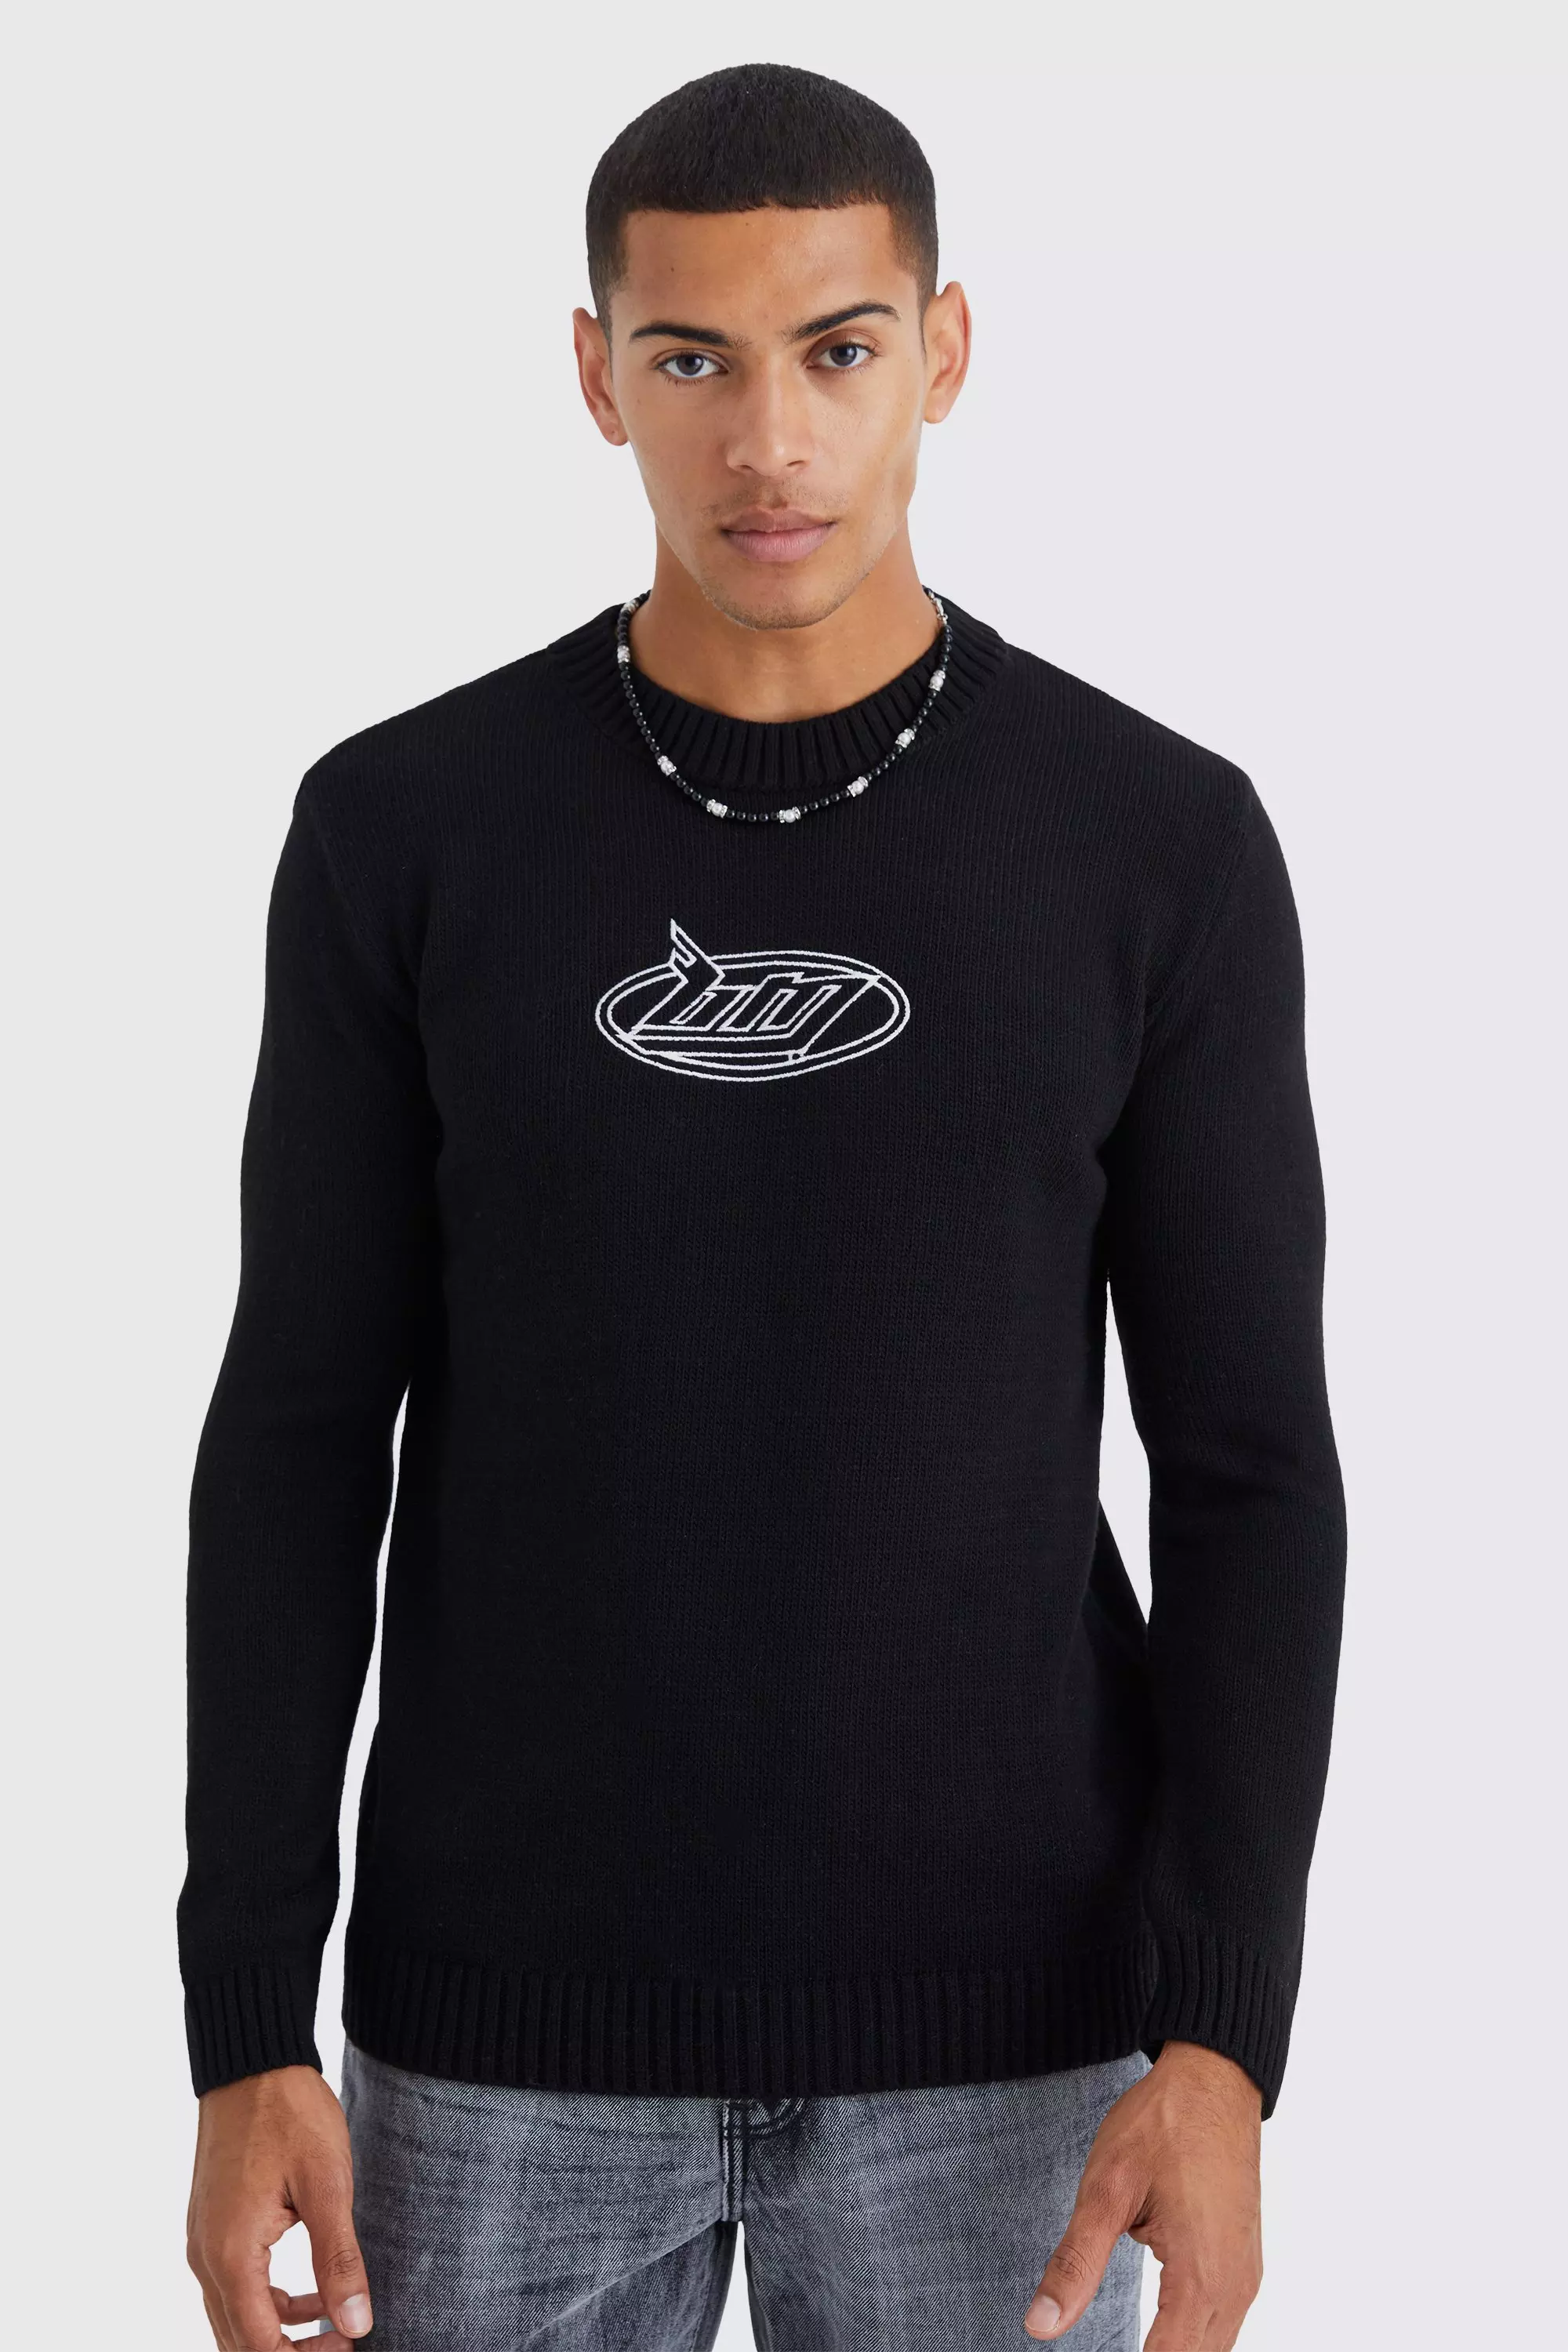 Regular B&m Embroidered Sweater Black